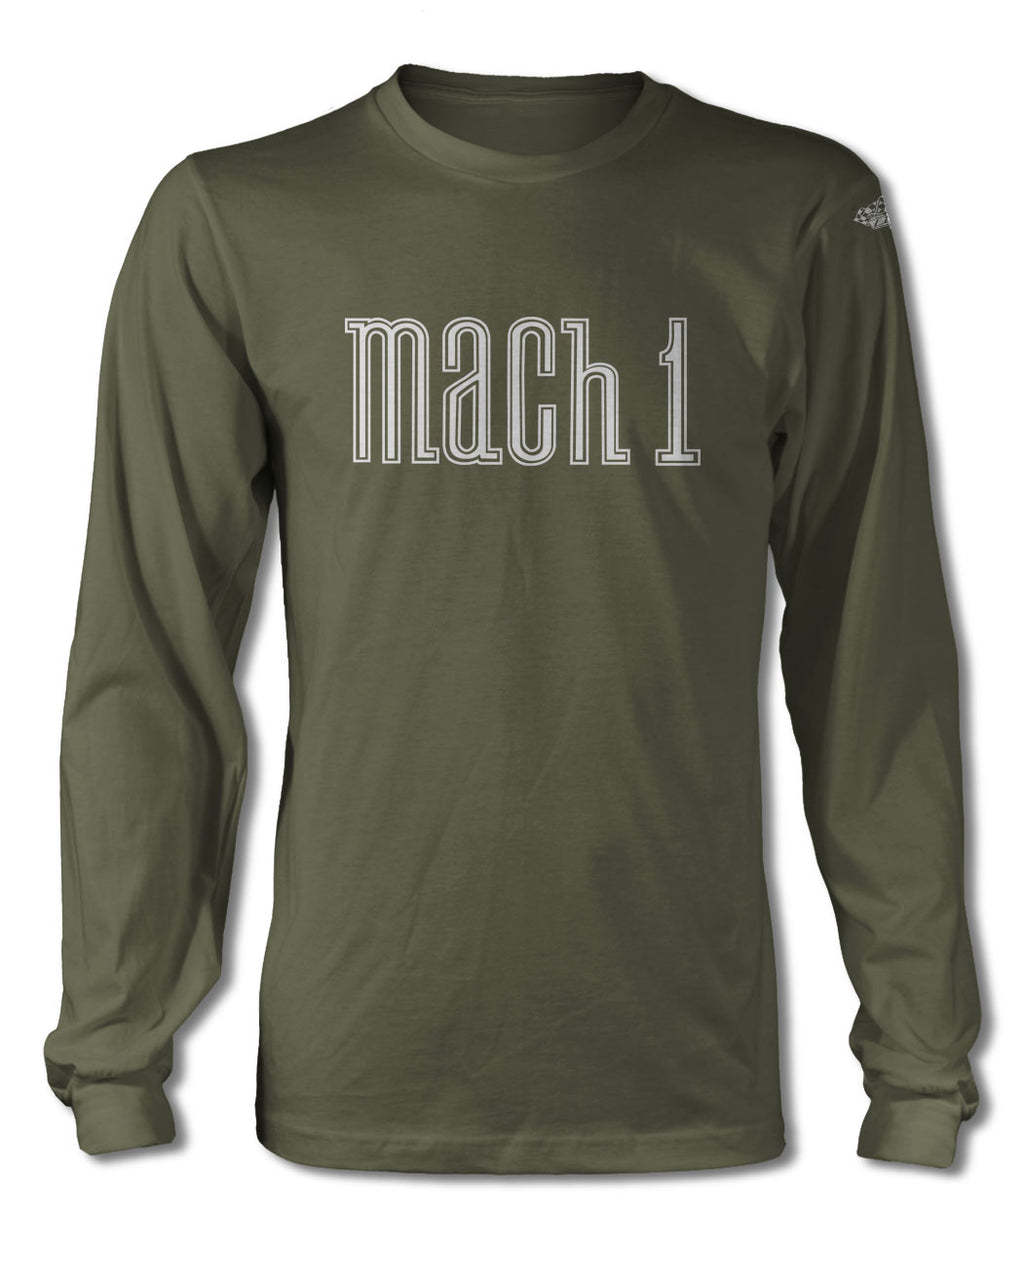 Ford Mustang Mach 1 Emblem T-Shirt - Long Sleeves - Emblem